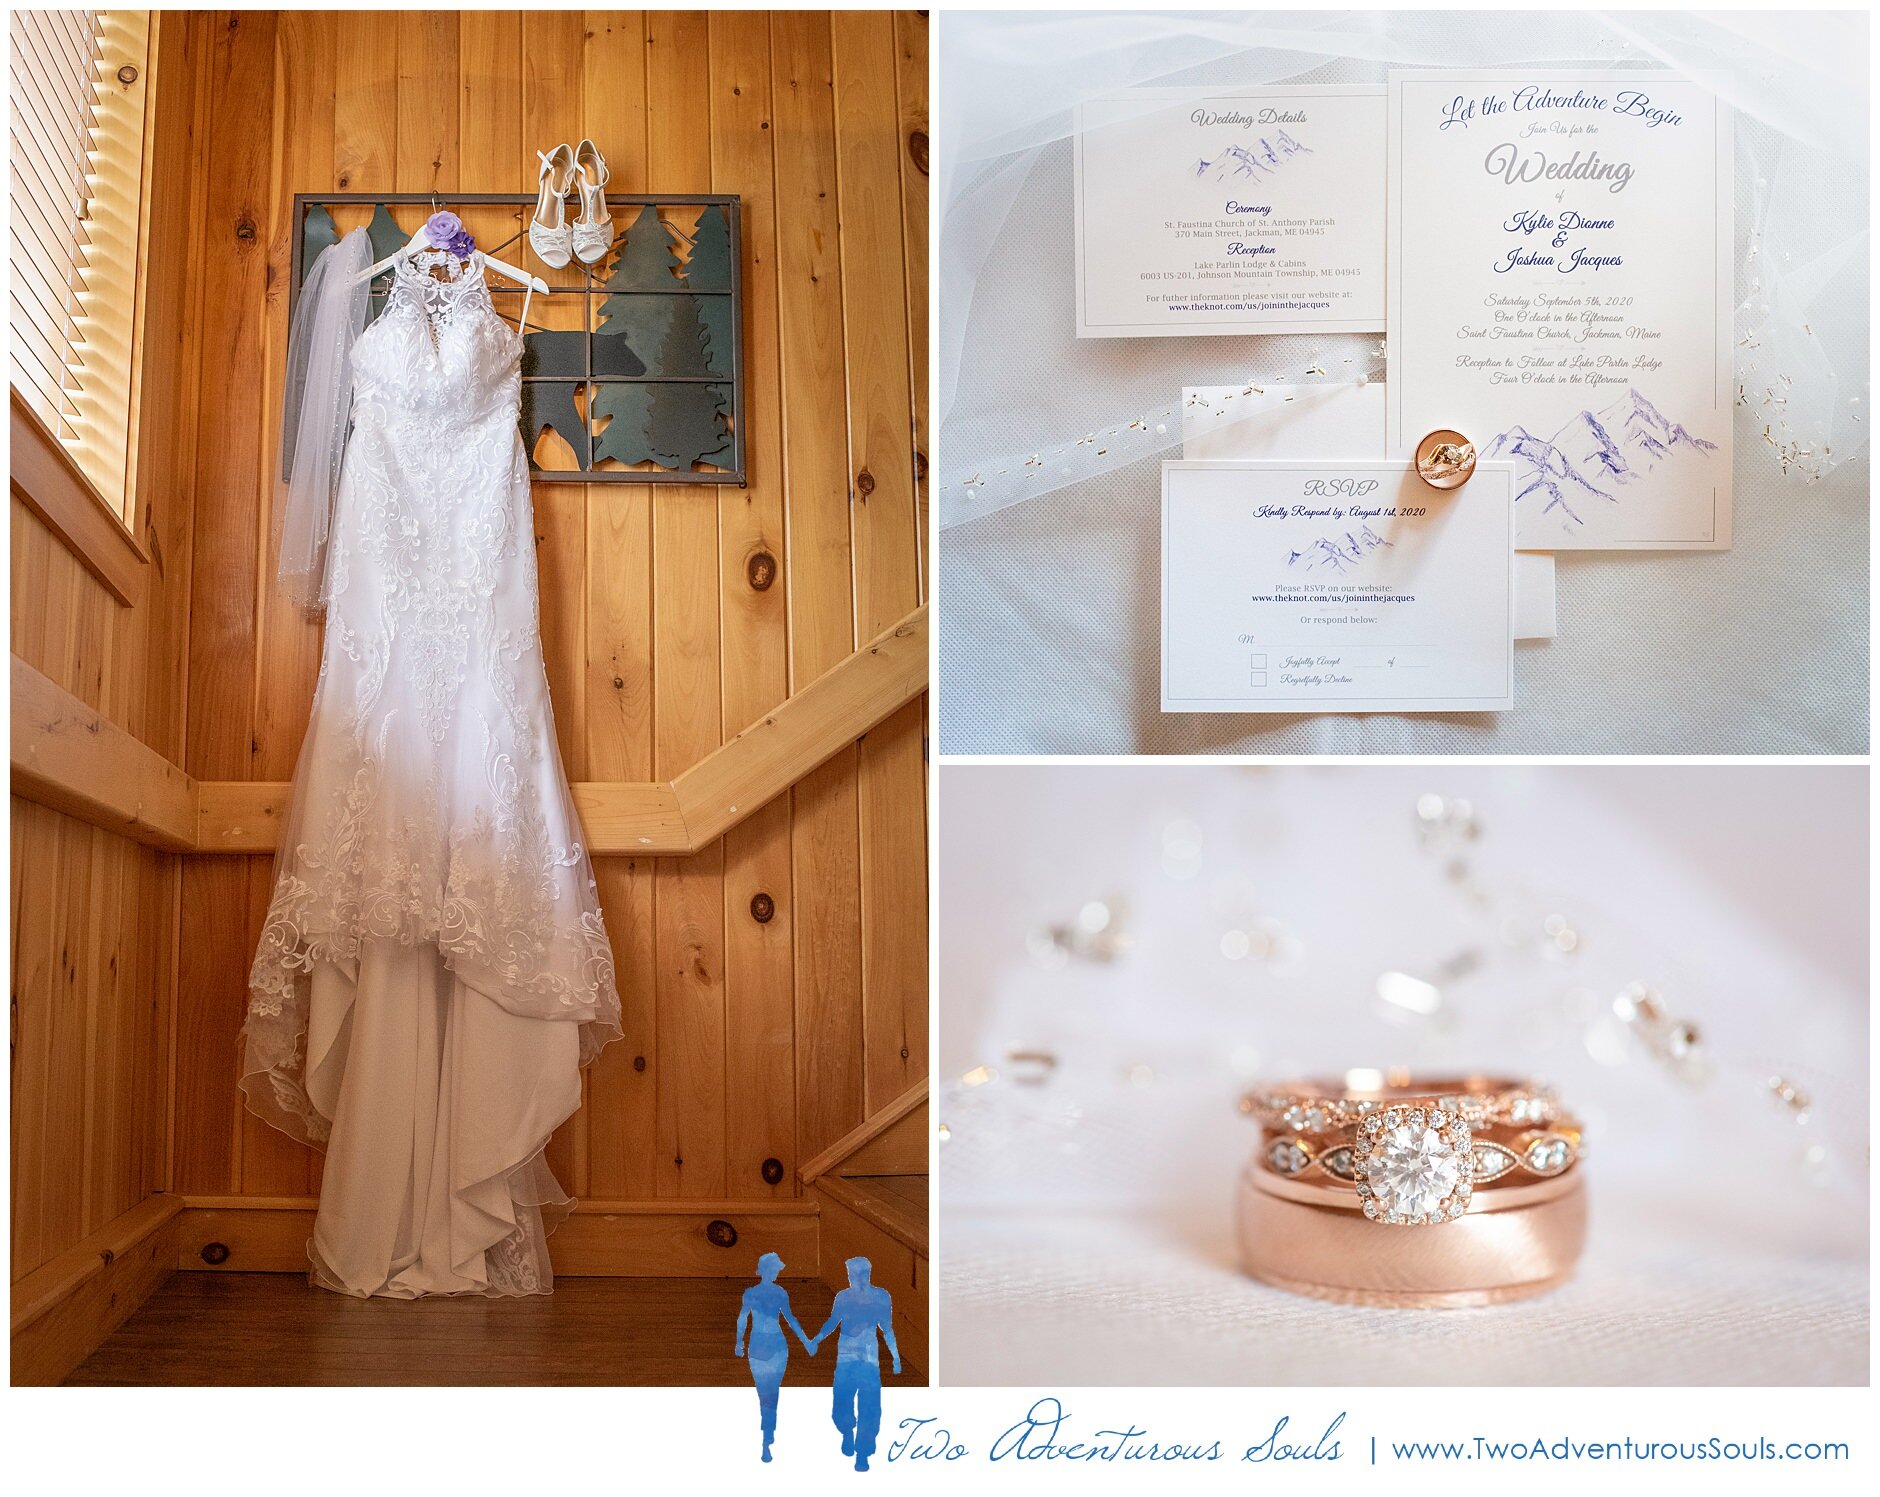 Lake Parlin Lodge Wedding Photos, Jackman Maine Wedding Photographers, Two Adventurous Souls - 090520_0001.jpg